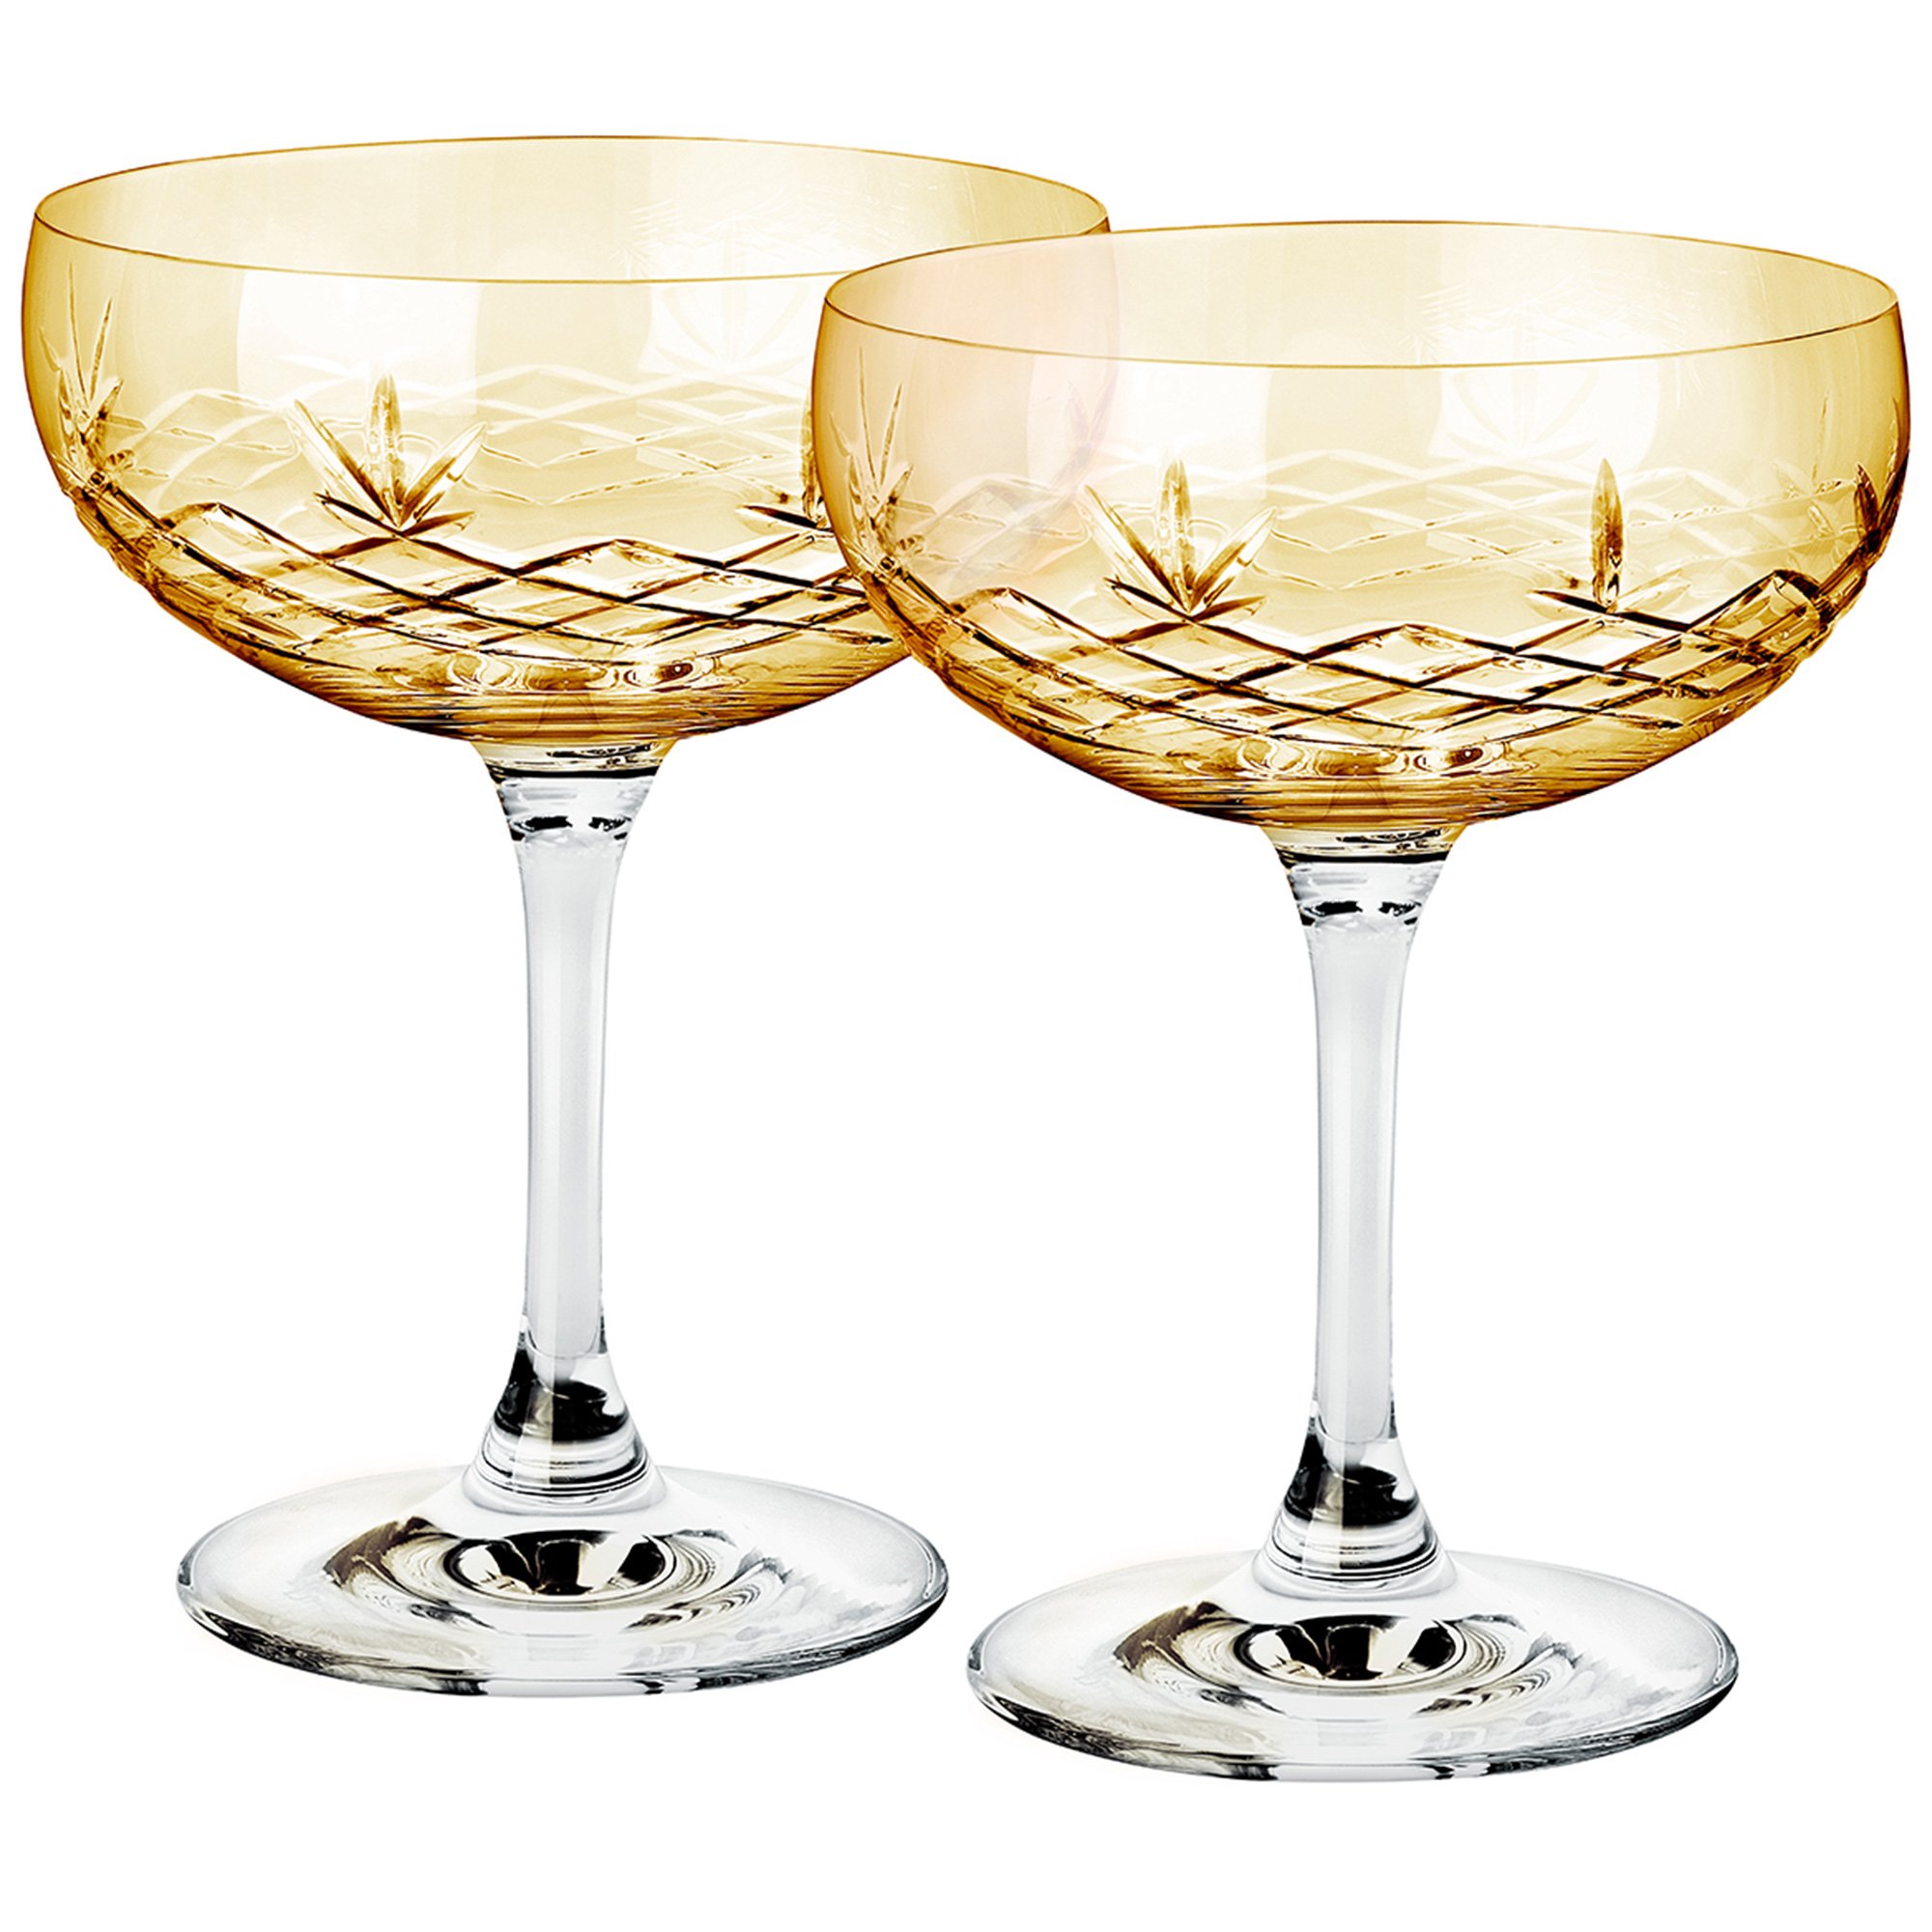 5: Frederik Bagger Crispy Gatsby Champagneglas, 2 stk. citrine